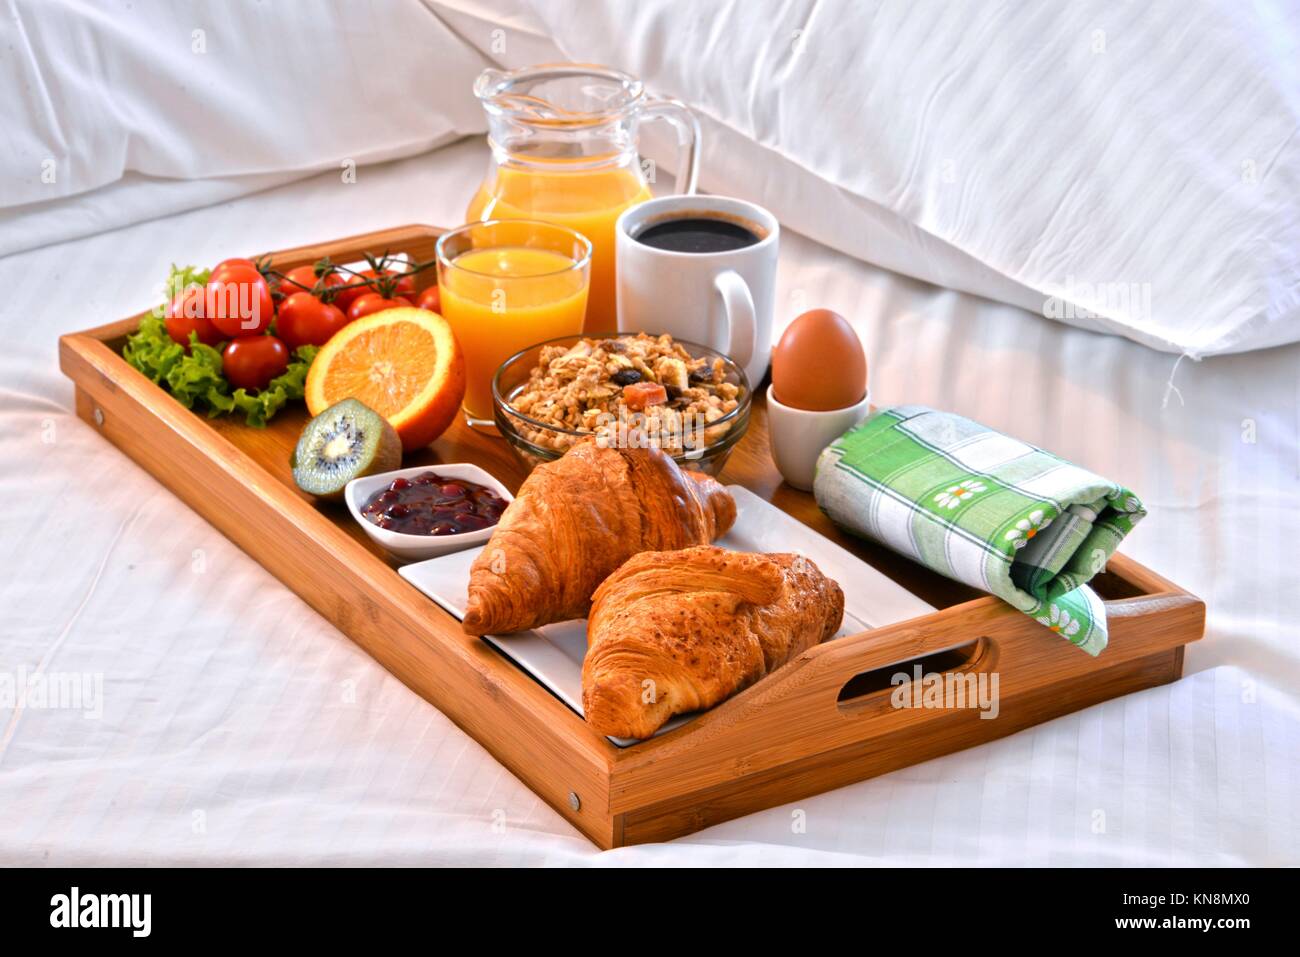 Breakfast tray in bed in hotel room Stock Photo - Alamy